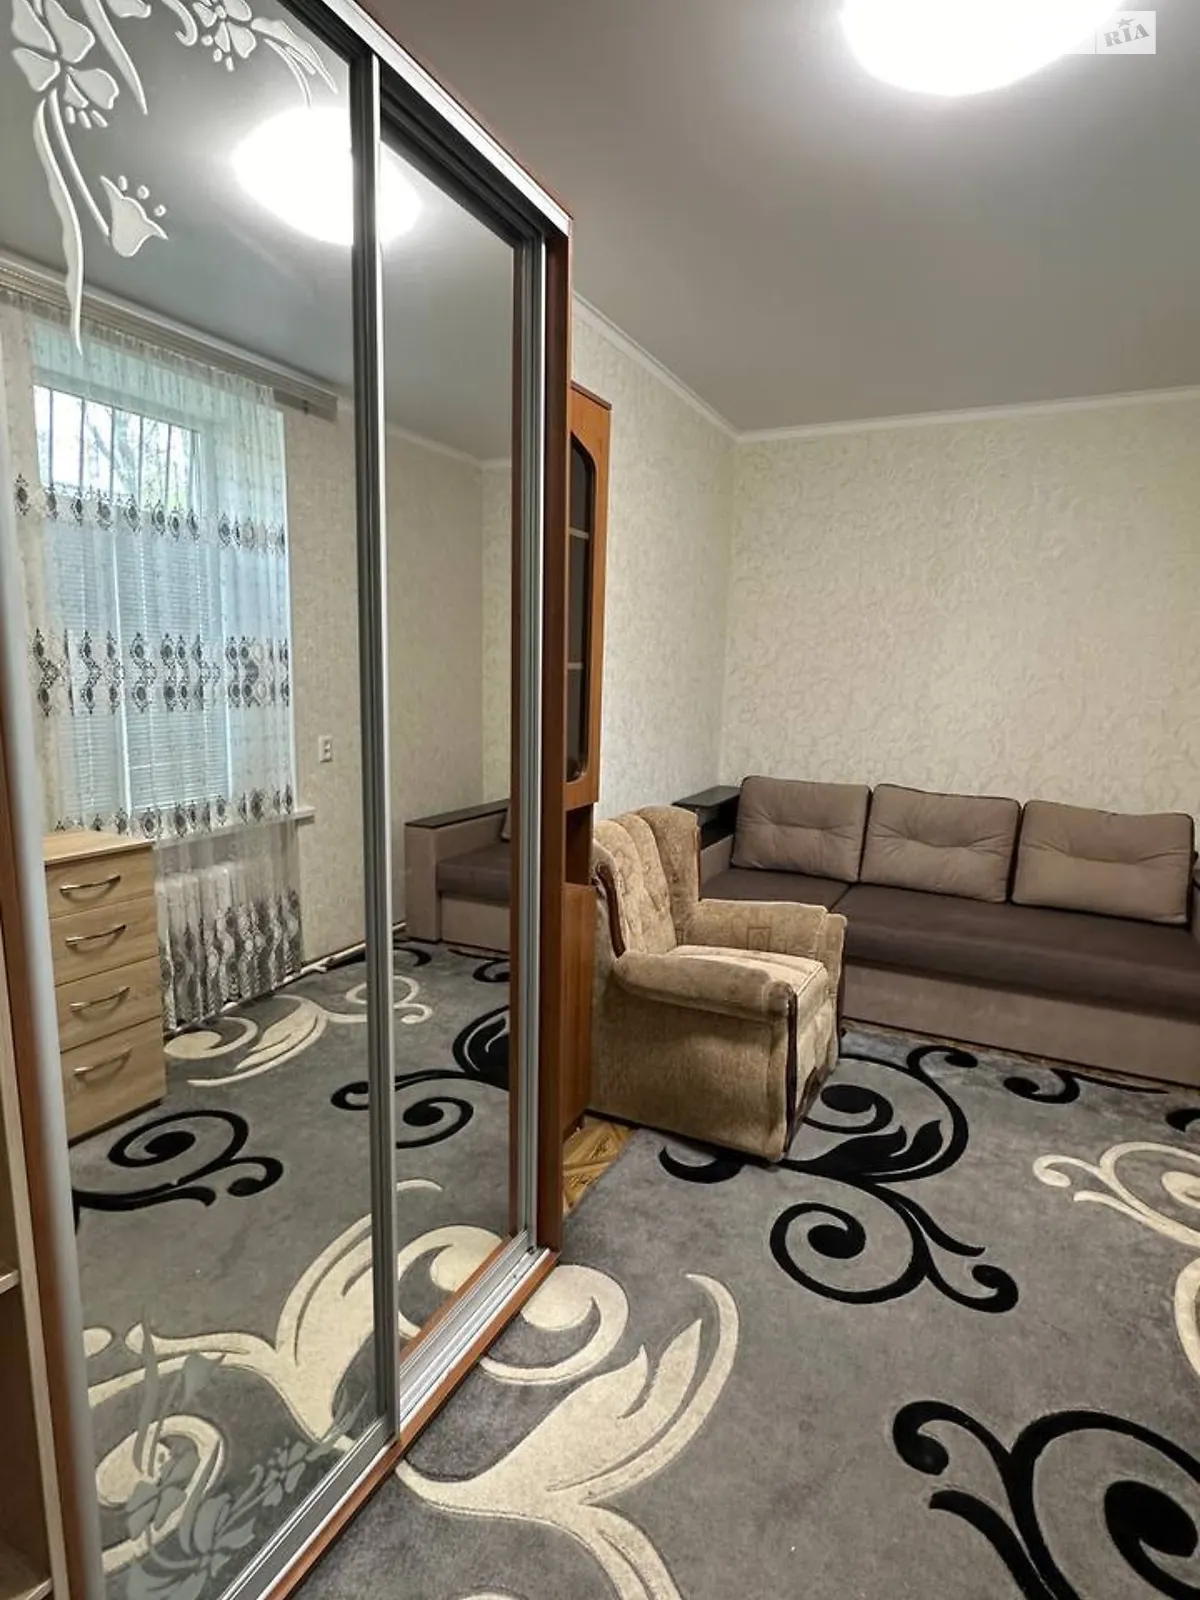 Продается комната 35 кв. м в Николаеве - фото 3